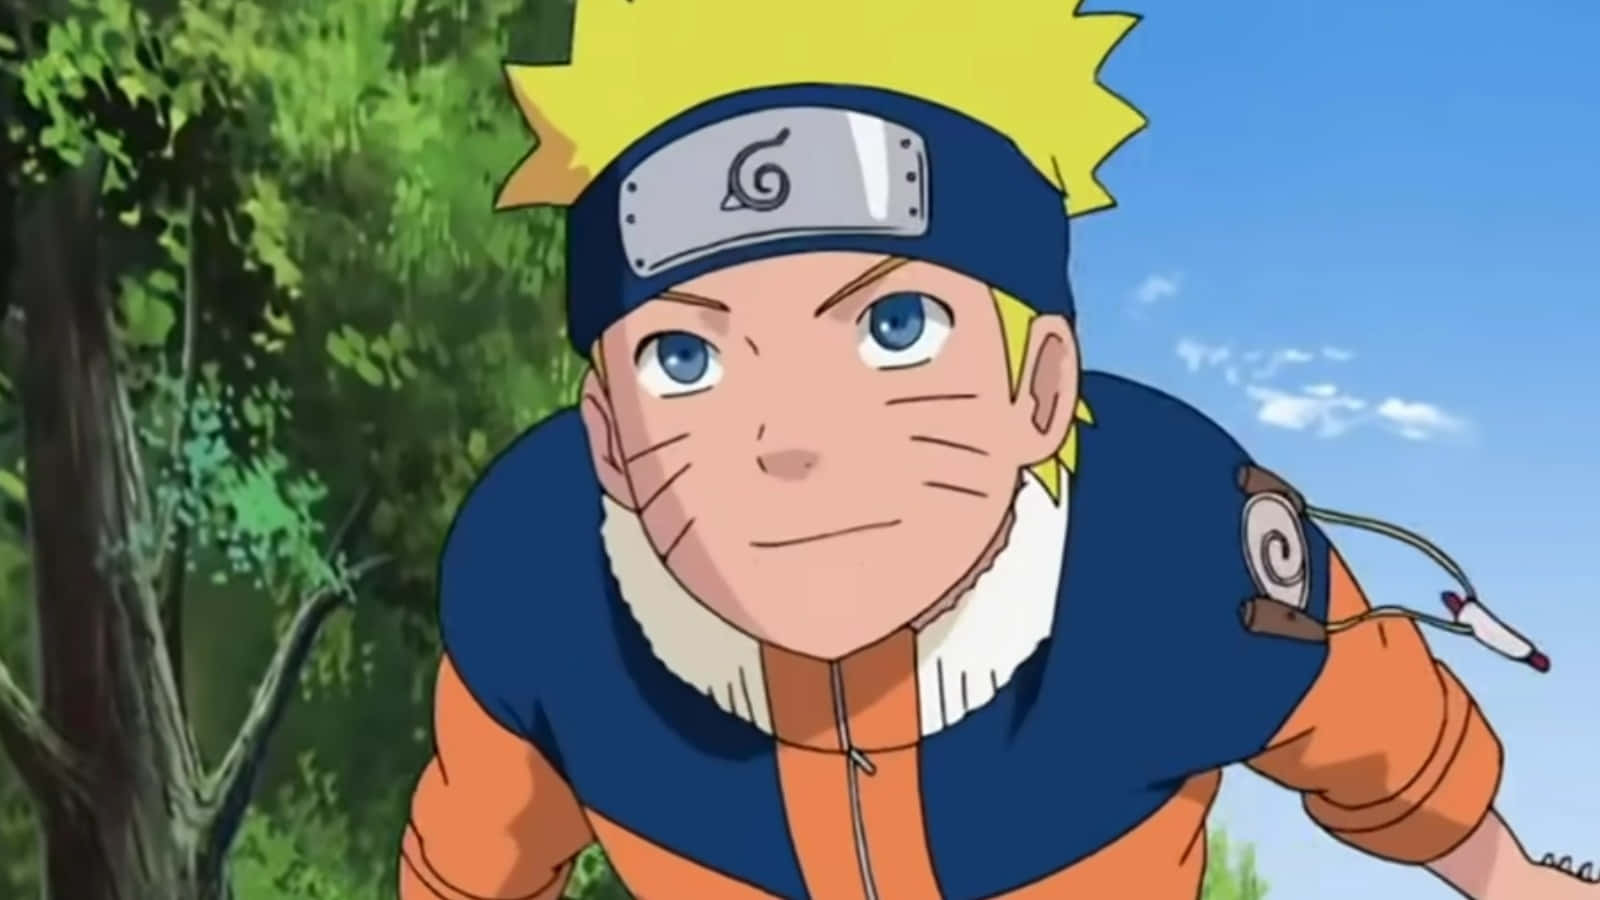 Naruto Uzumaki, a ninja with the power of a nine-tailed fox